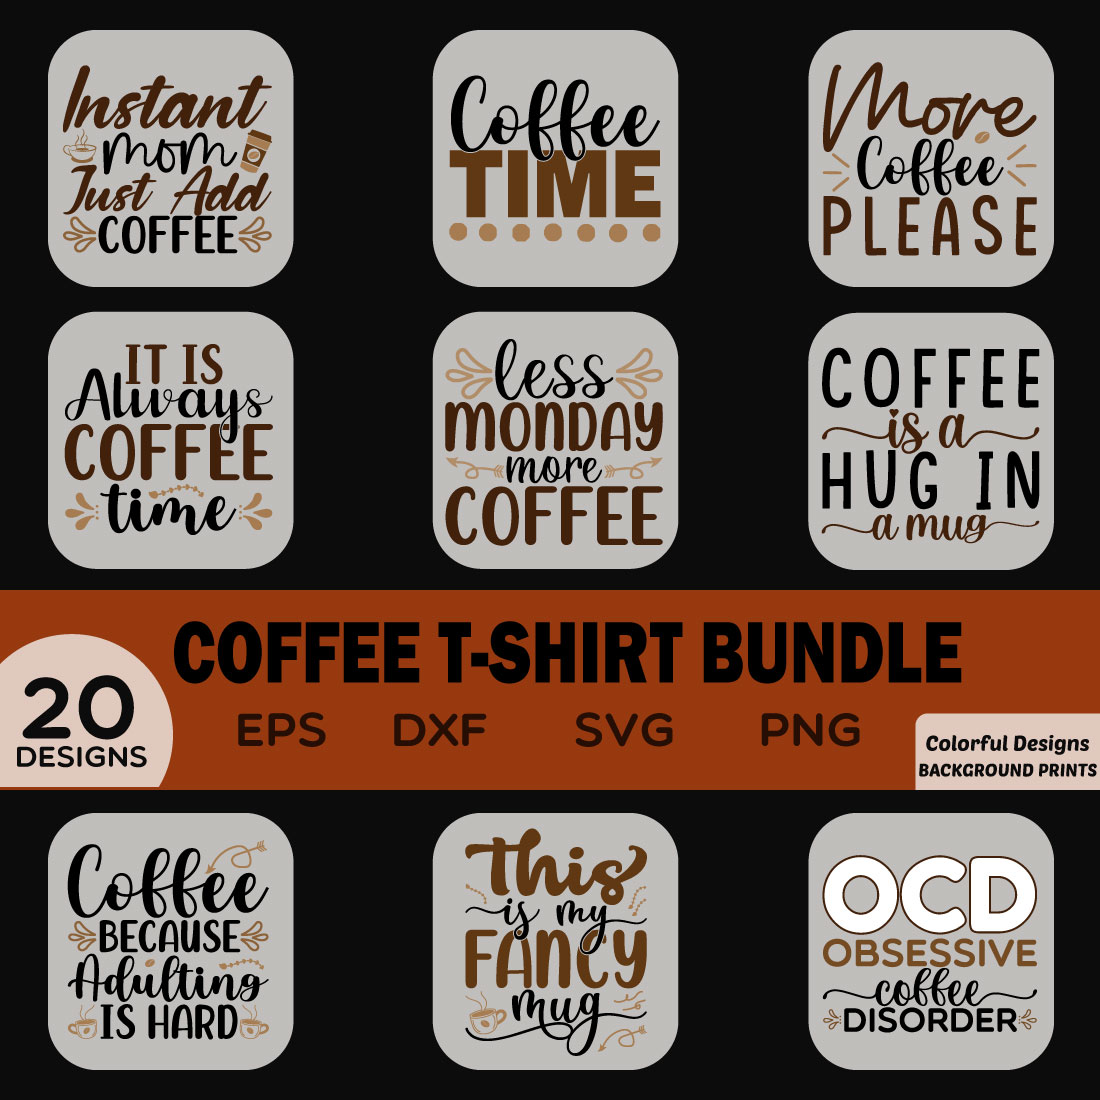 Coffee t-shirt design Bundle preview image.